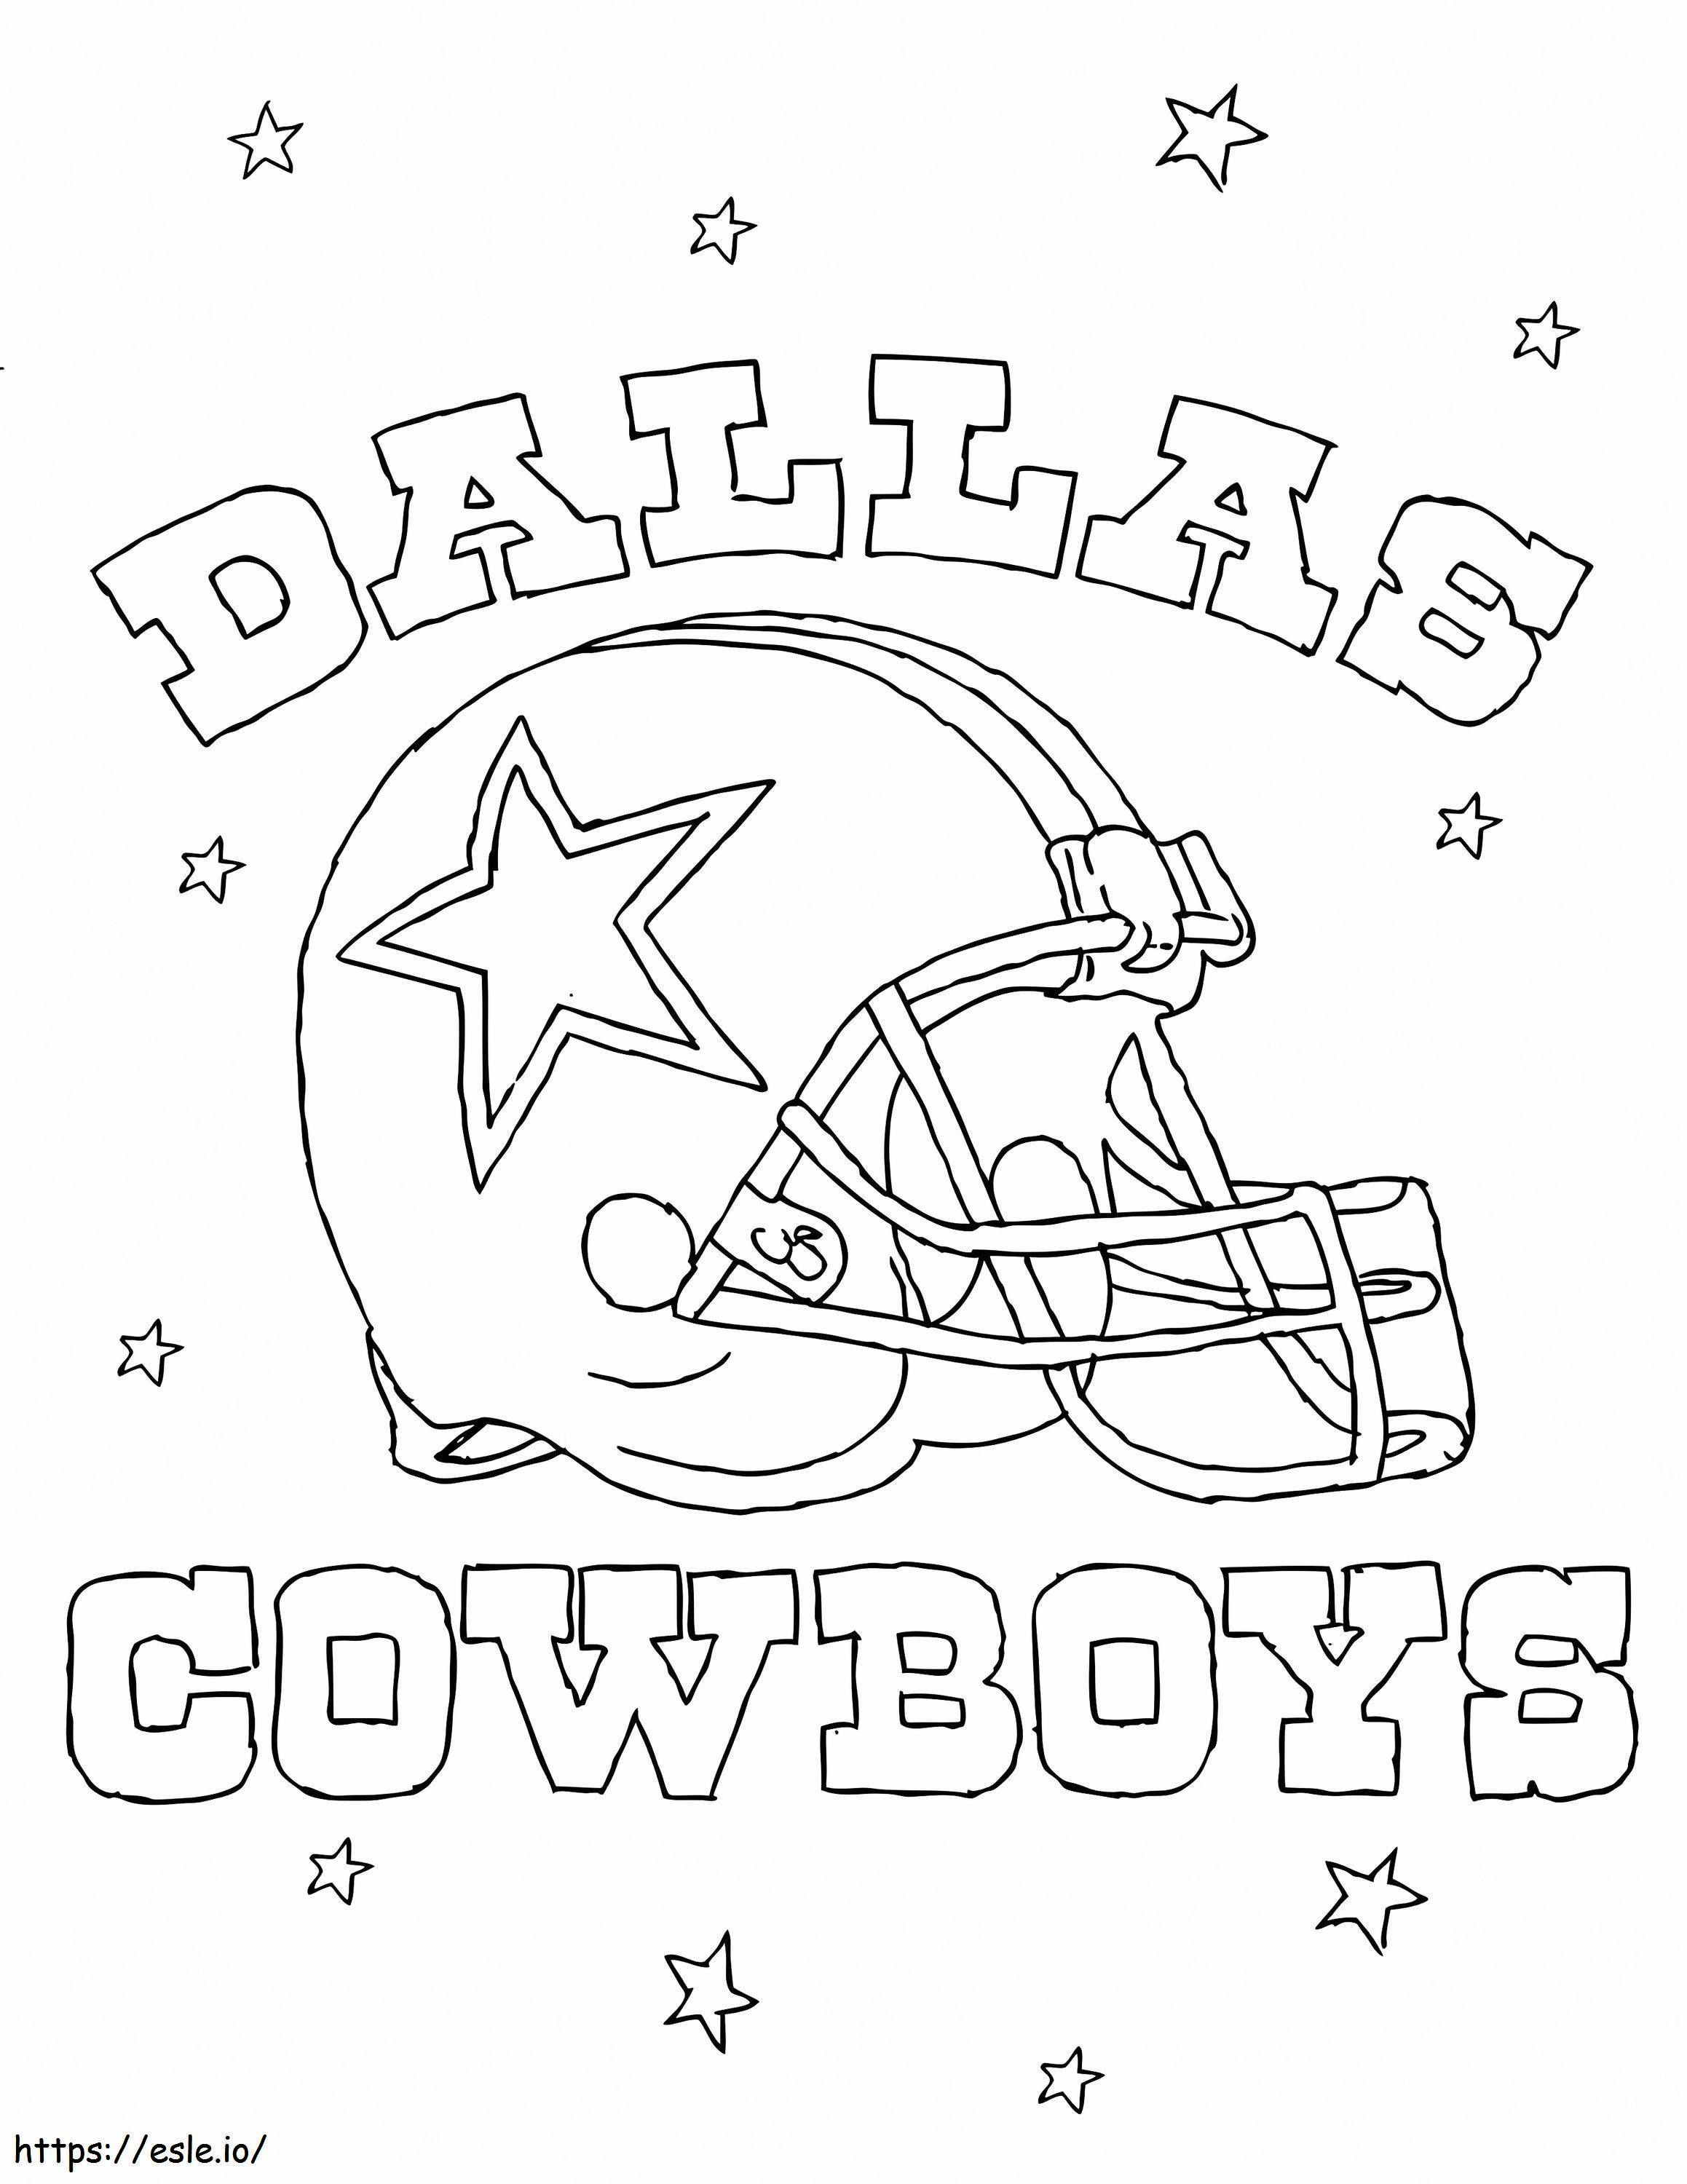 Dallas Cowboys ausmalbilder